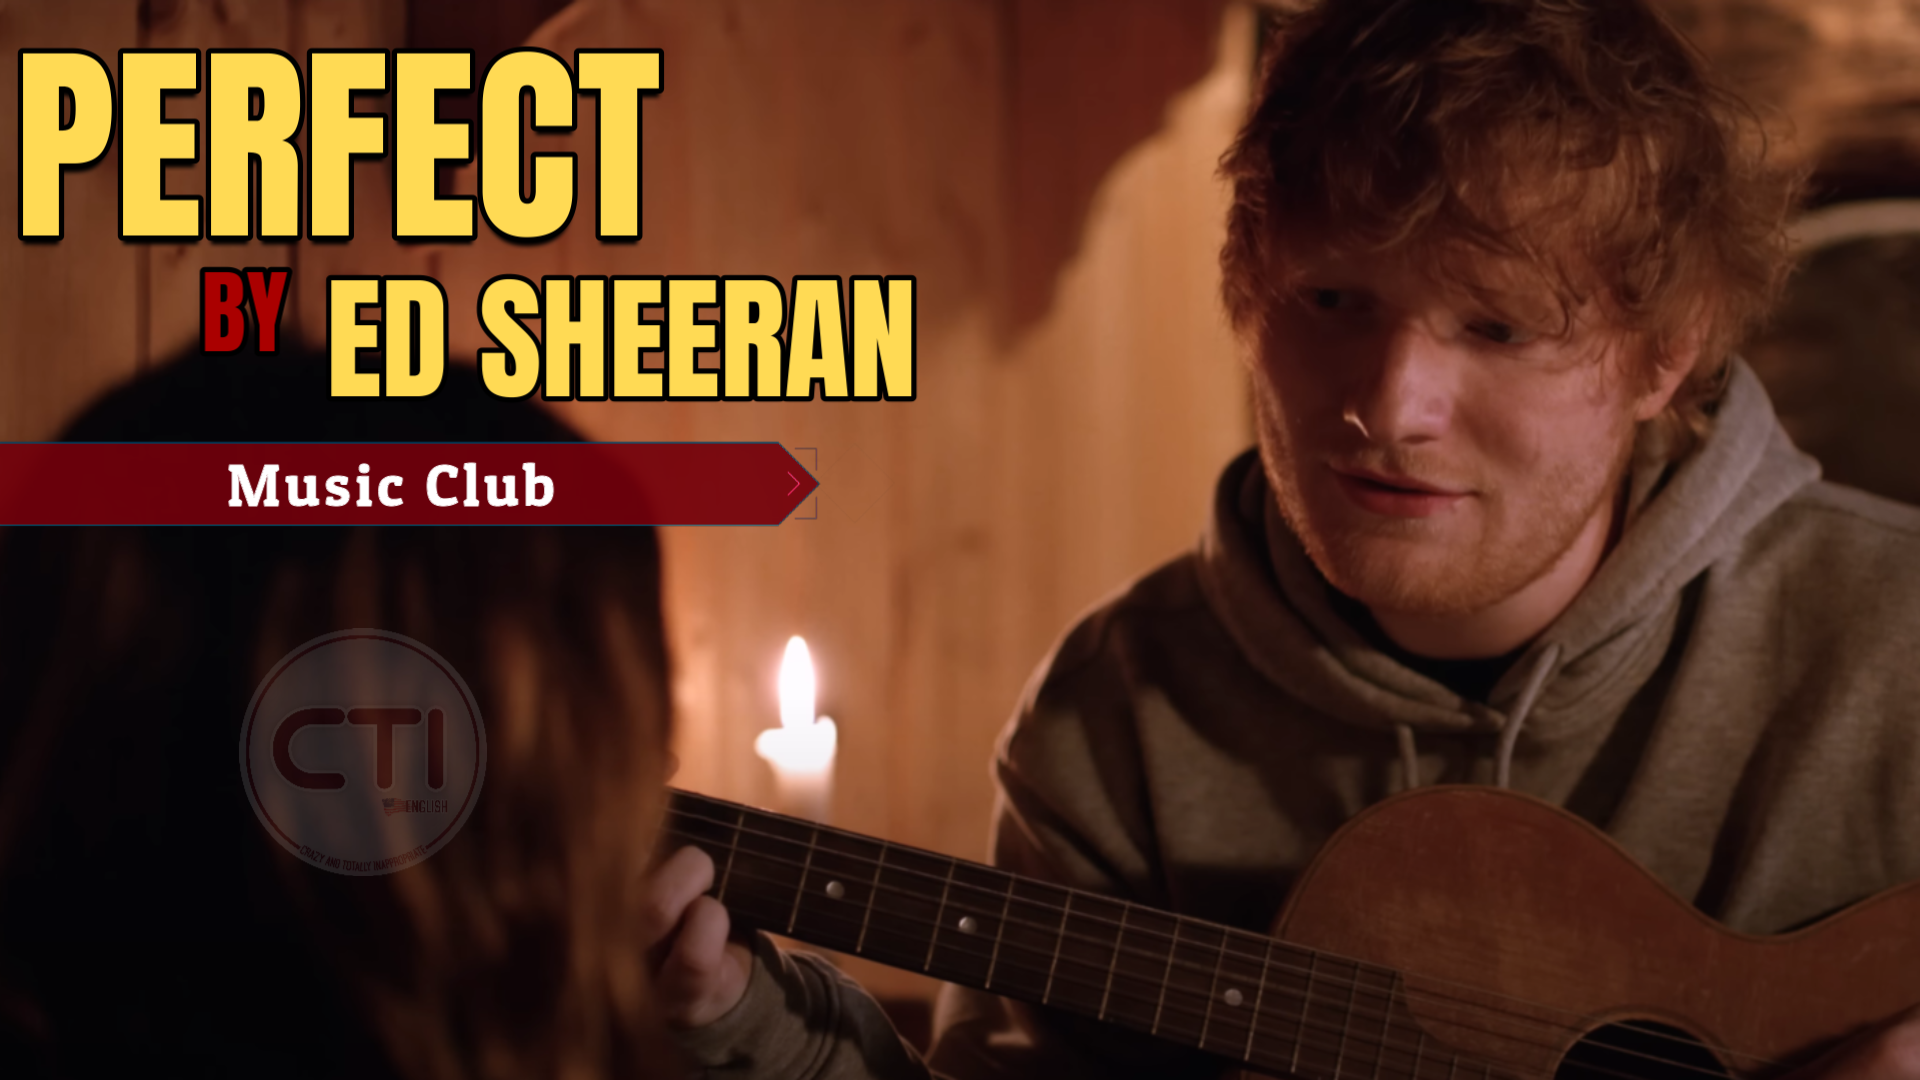 Aprenda Inglês com a Música Perfect de Ed Sheeran